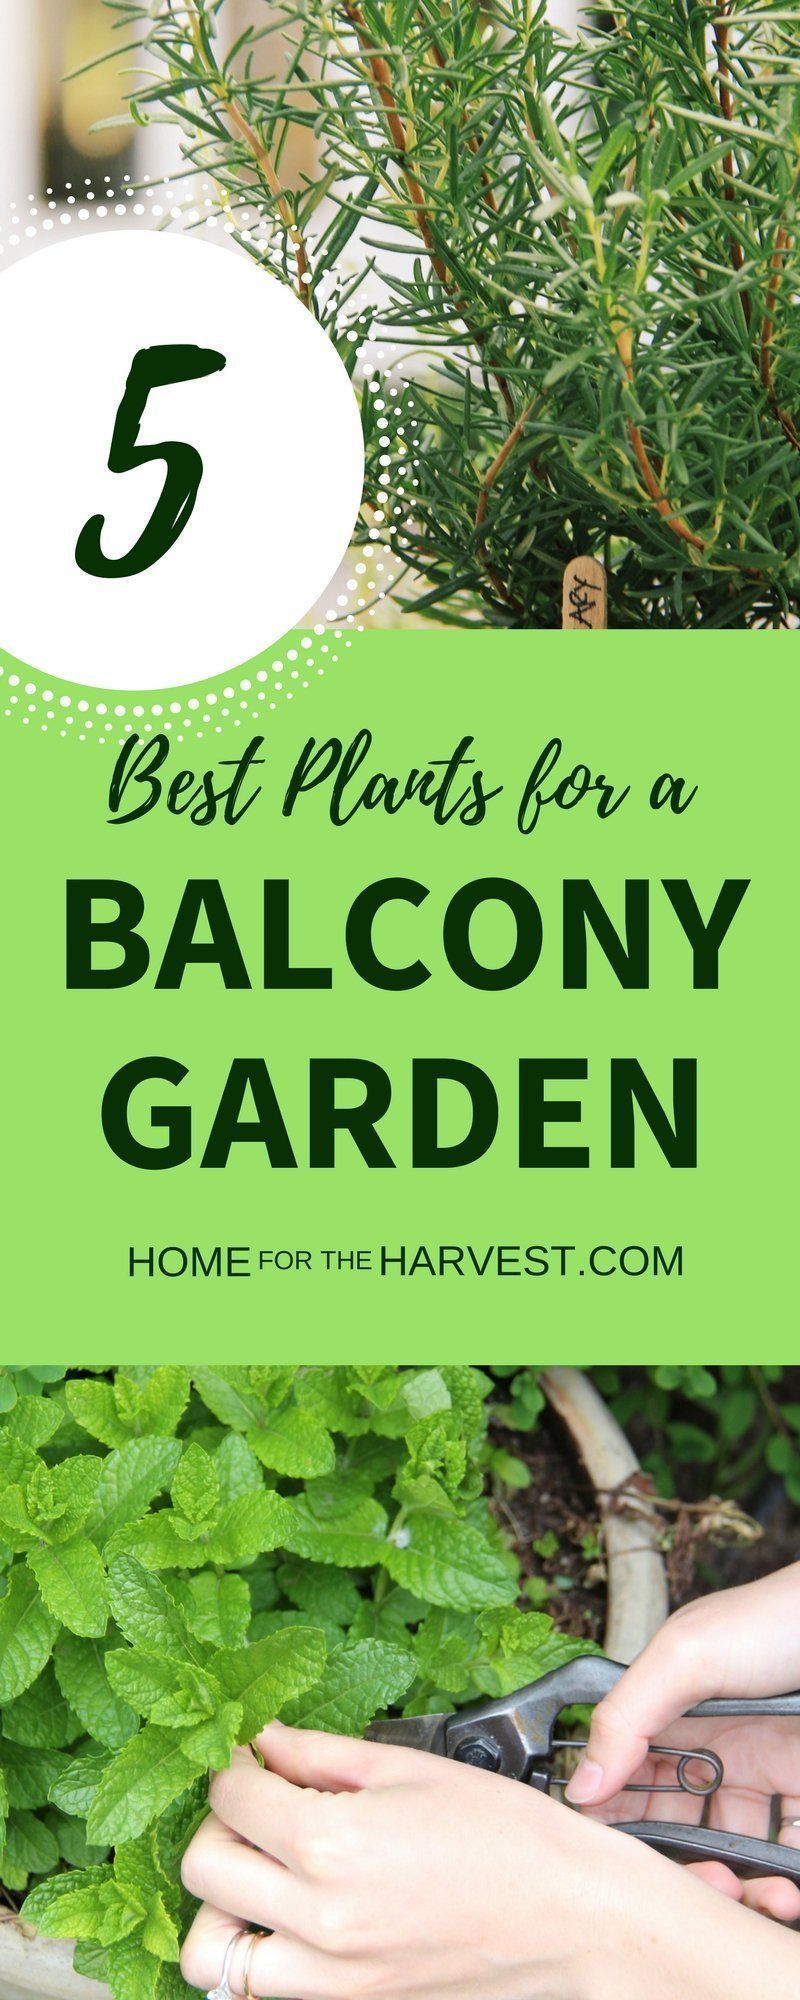 19 plants Balcony articles ideas